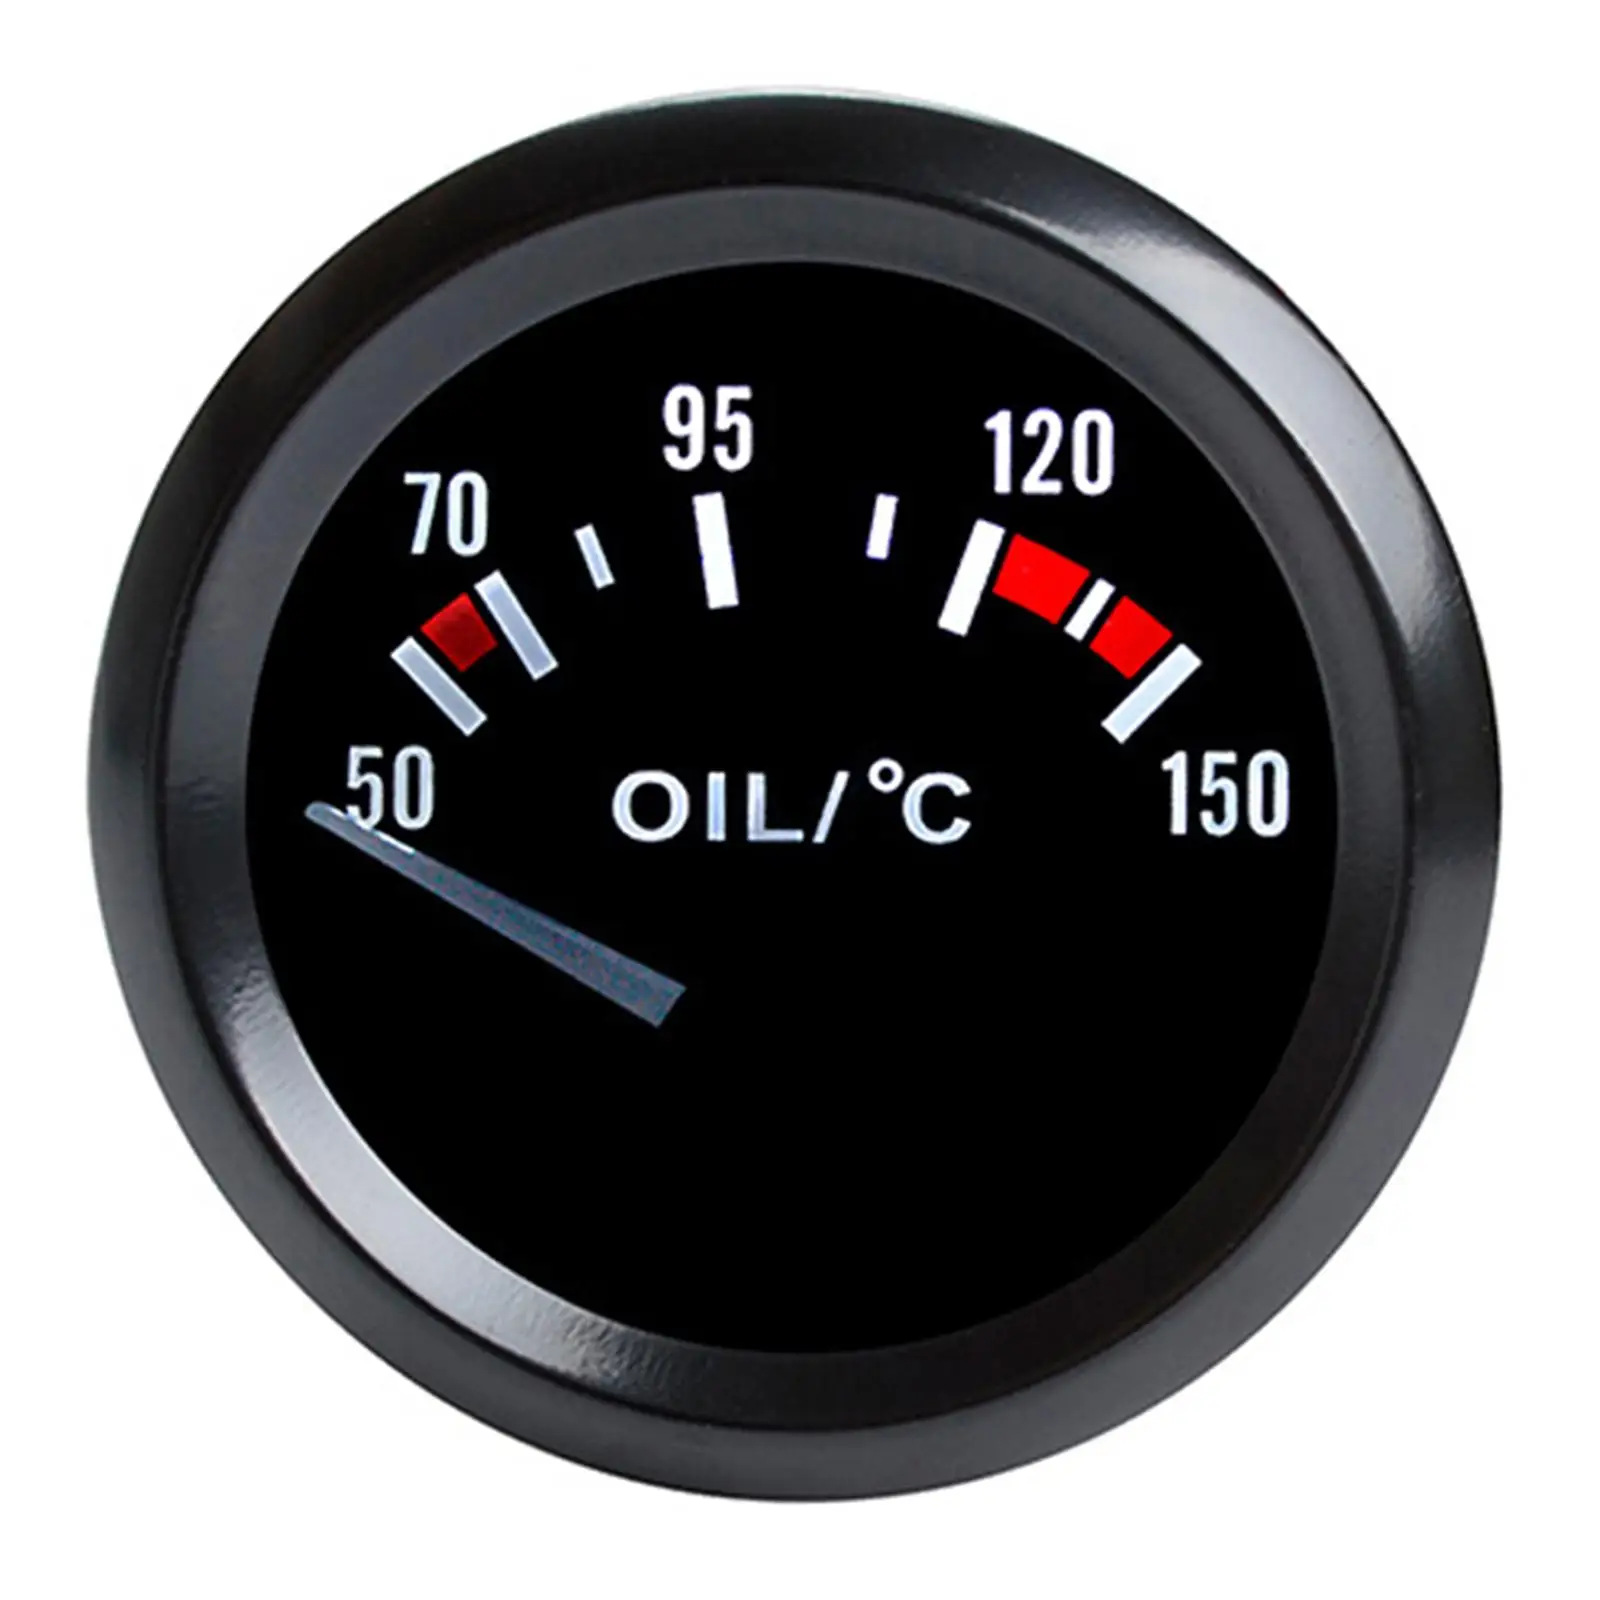 Oil Temp Gauge Spare Parts Oil Temperature Gauge for Car Vehicle Truck